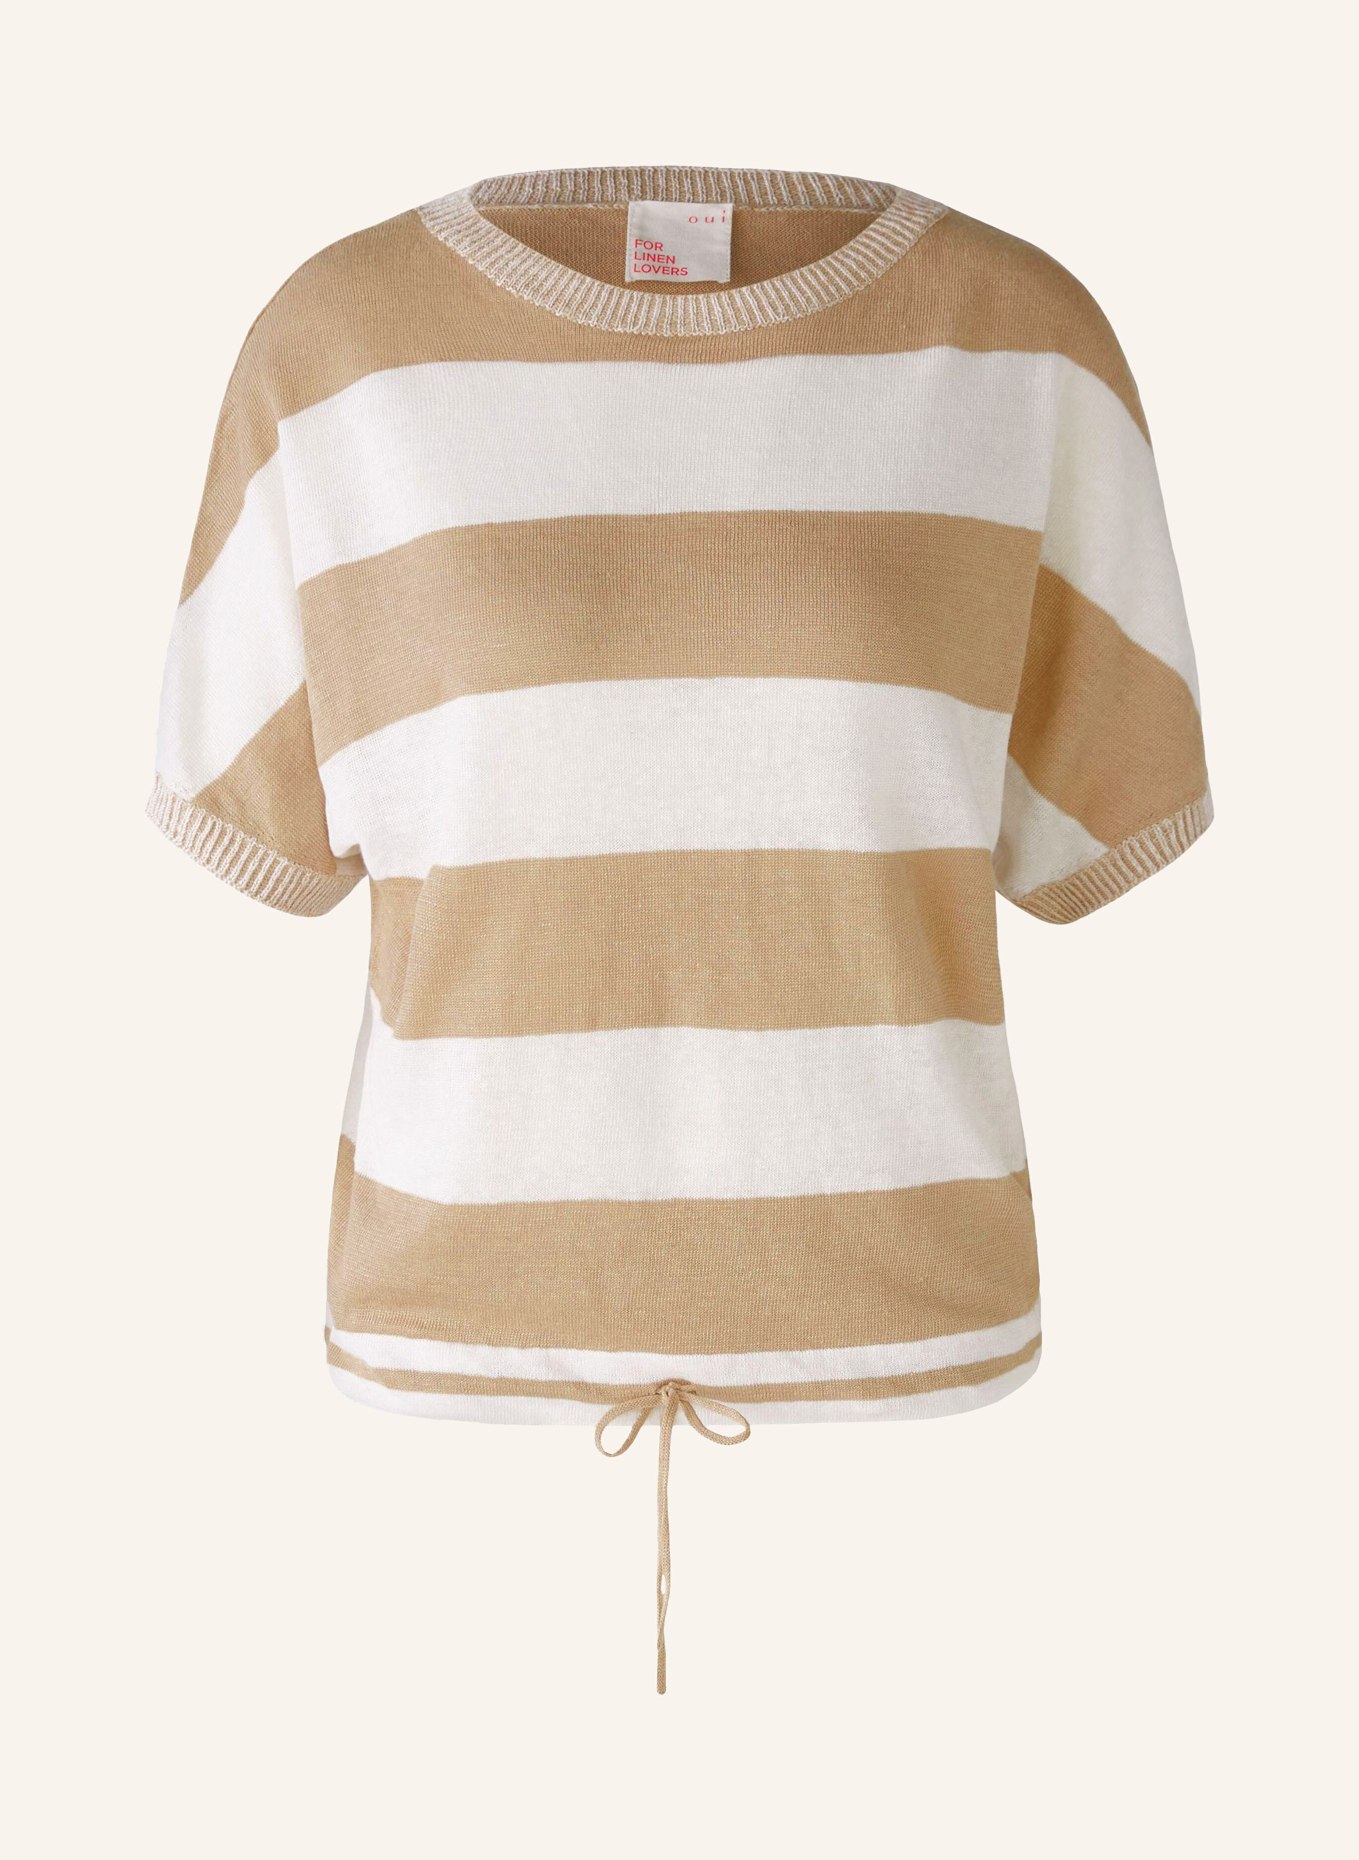 oui Strickshirt aus Leinen, Farbe: WEISS/ CAMEL (Bild 1)